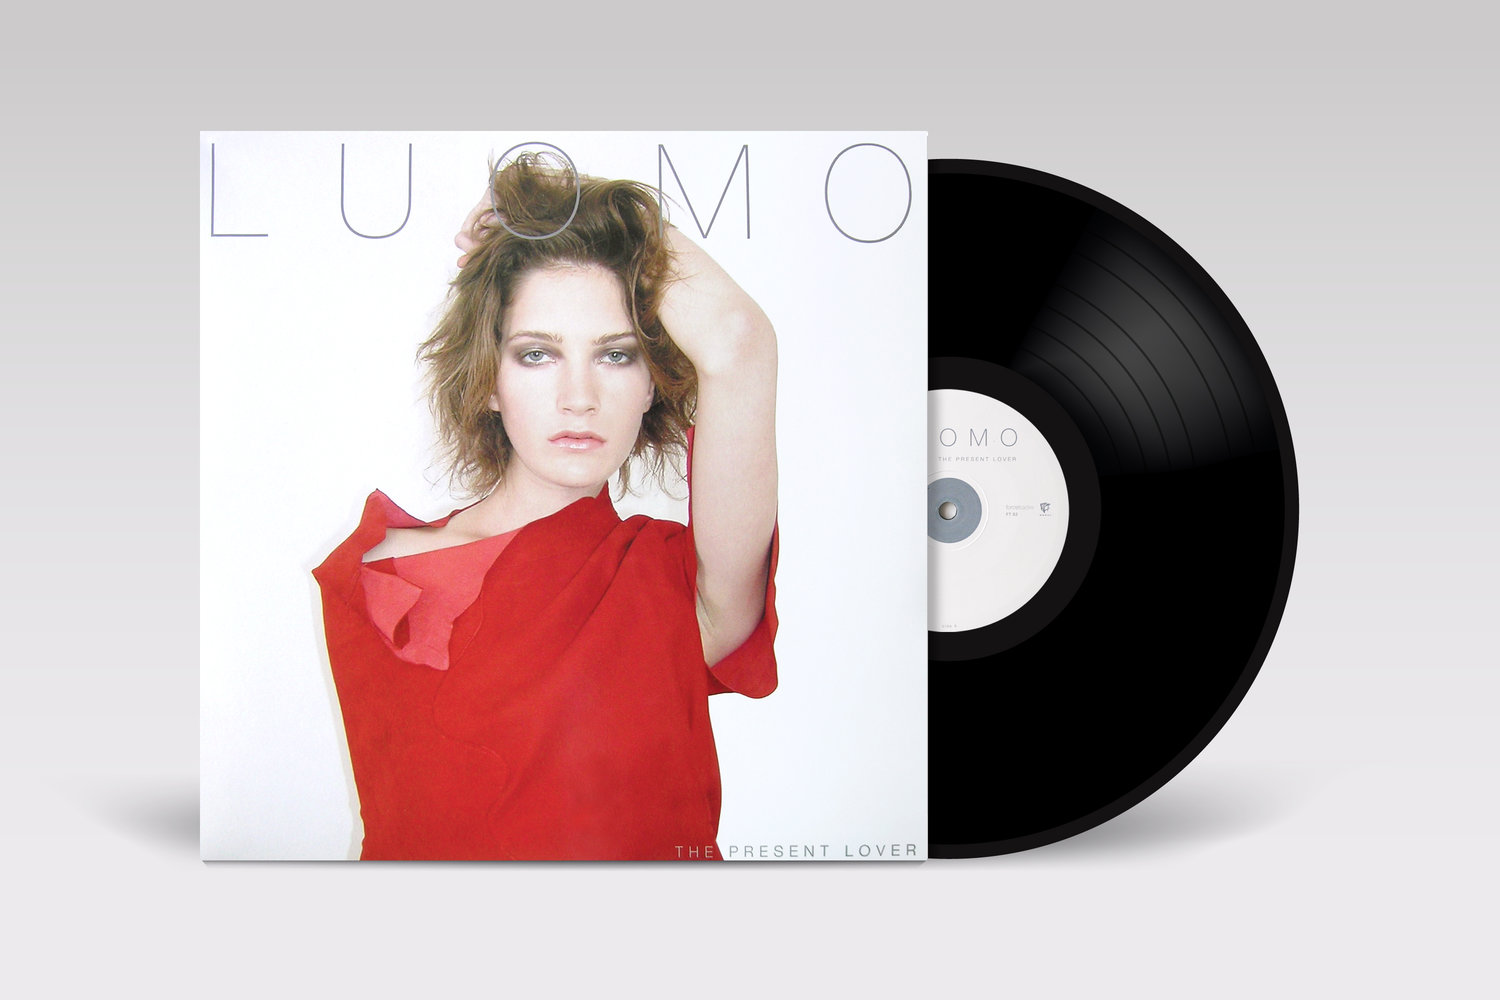 Luomo - The Present Lover [VINYL] -  Music